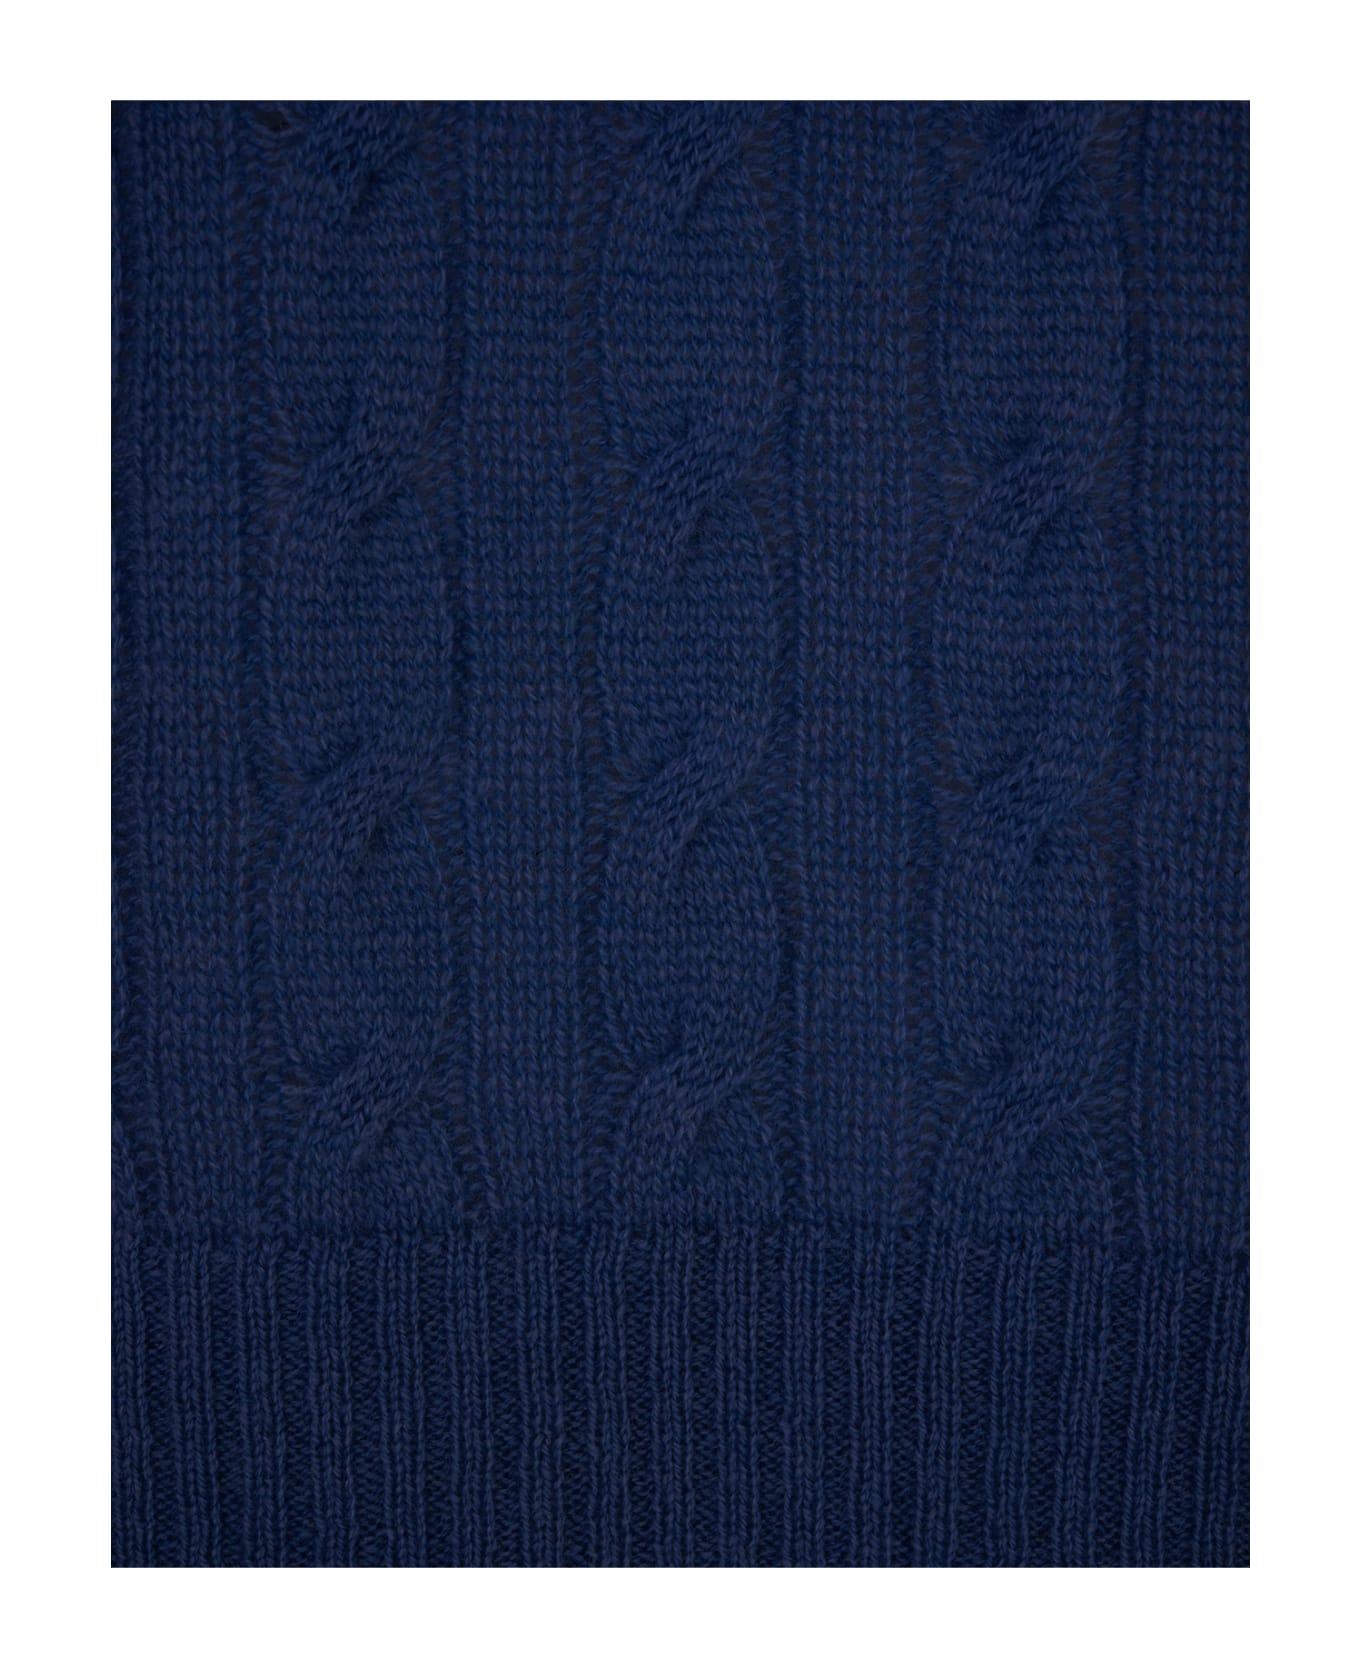 Etro Blue Braided Cashmere Sweater - Blue